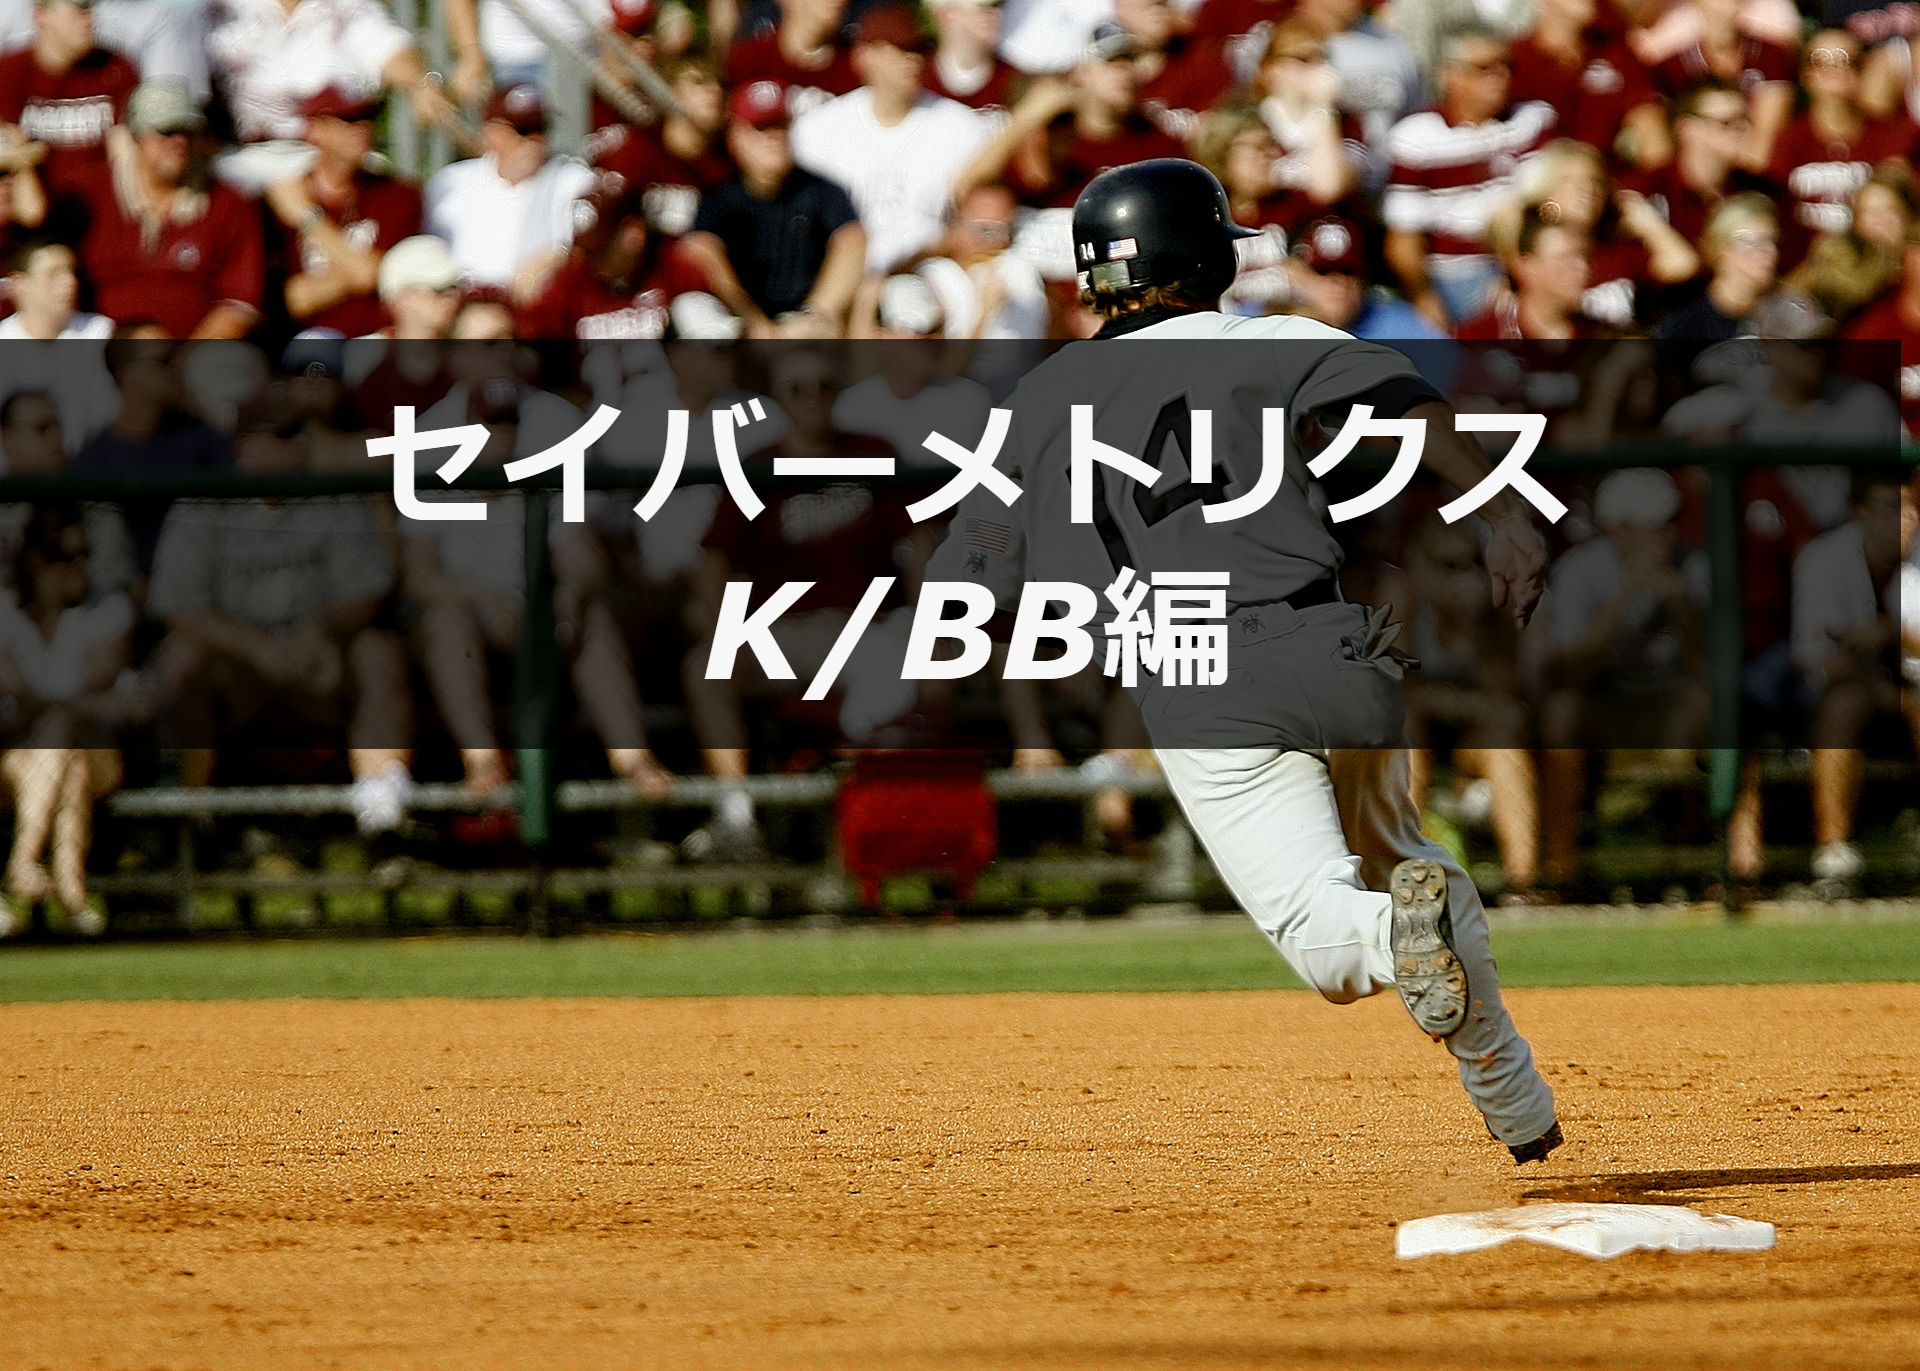 K Bb 知ると面白くなる野球の指標 セイバーメトリクス プロ野球マーケット